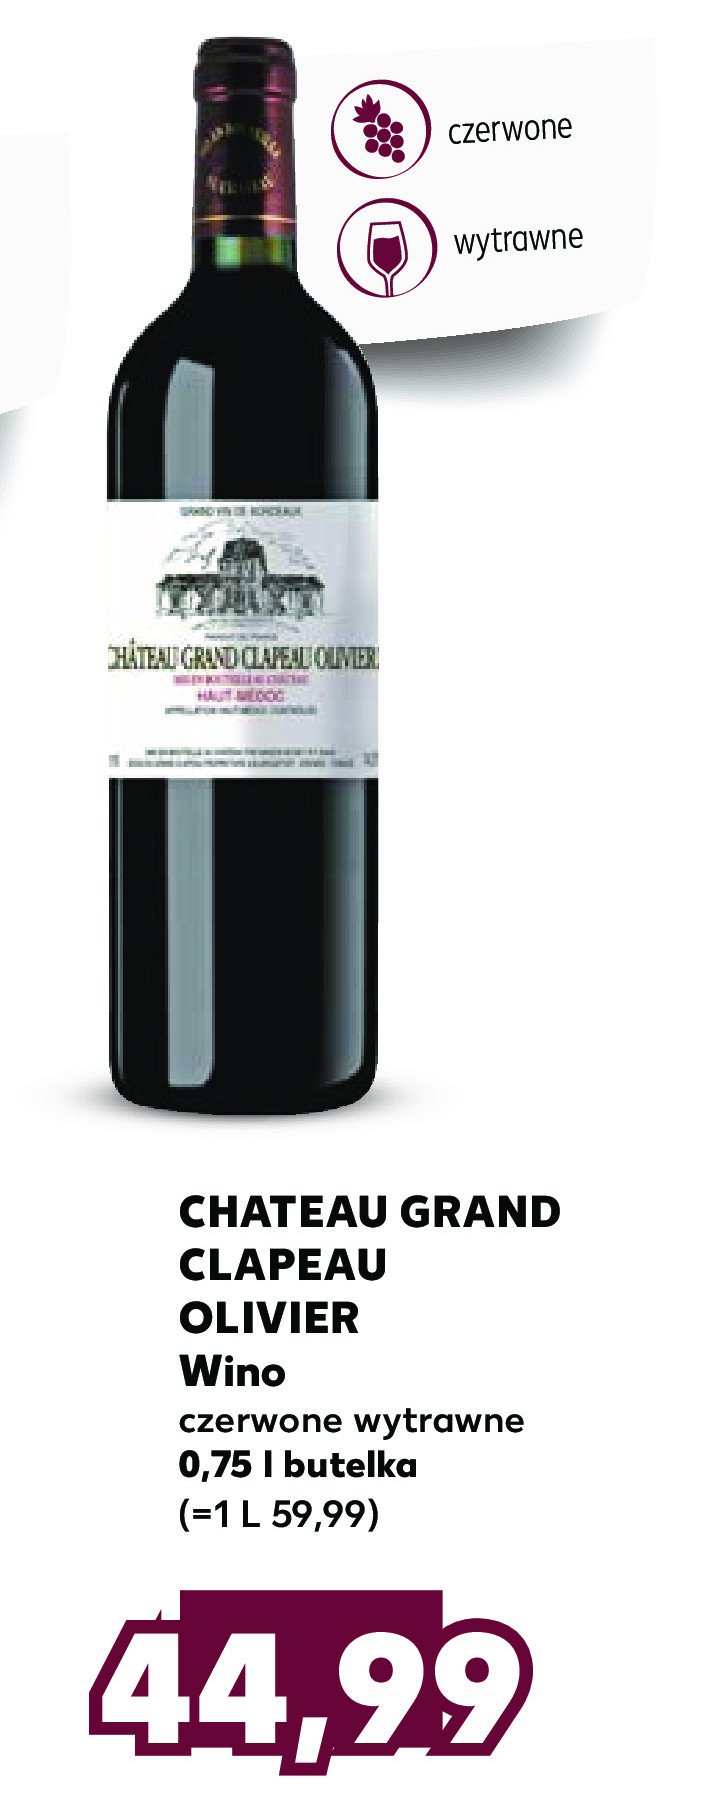 Wino Chateau grand clapeau olivier haut-medoc promocja